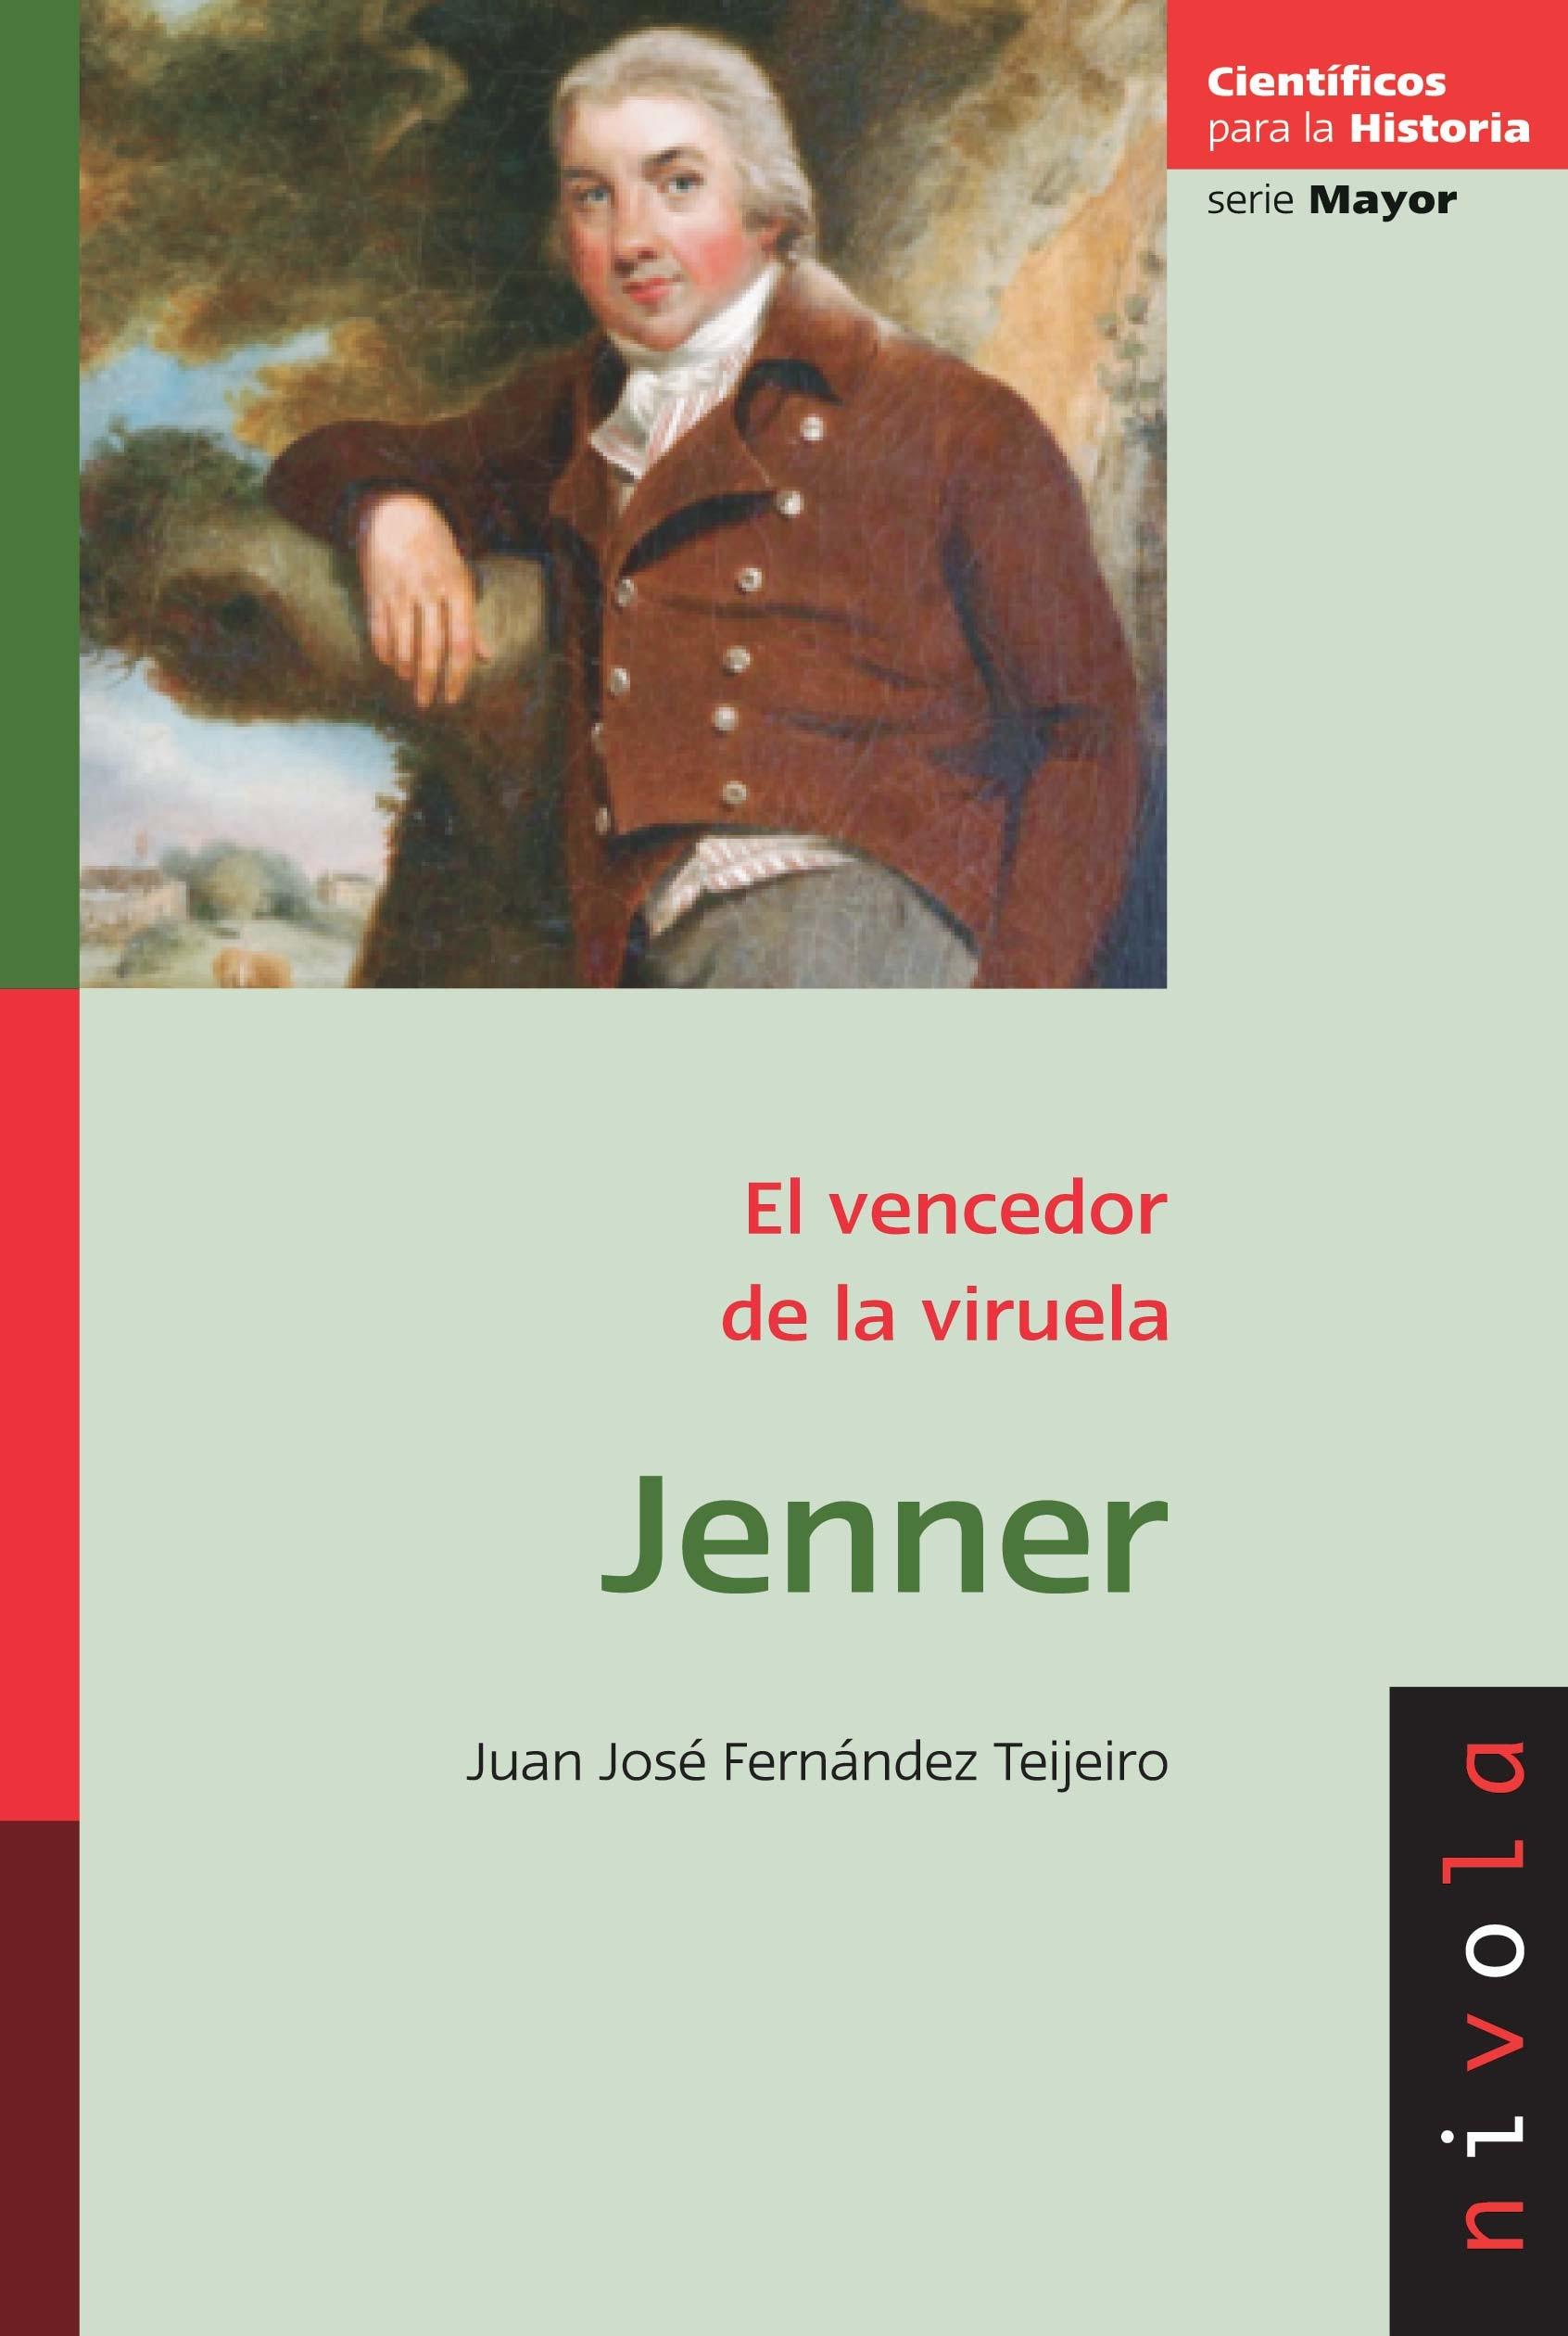 Jenner "El vencedor de la viruela". 